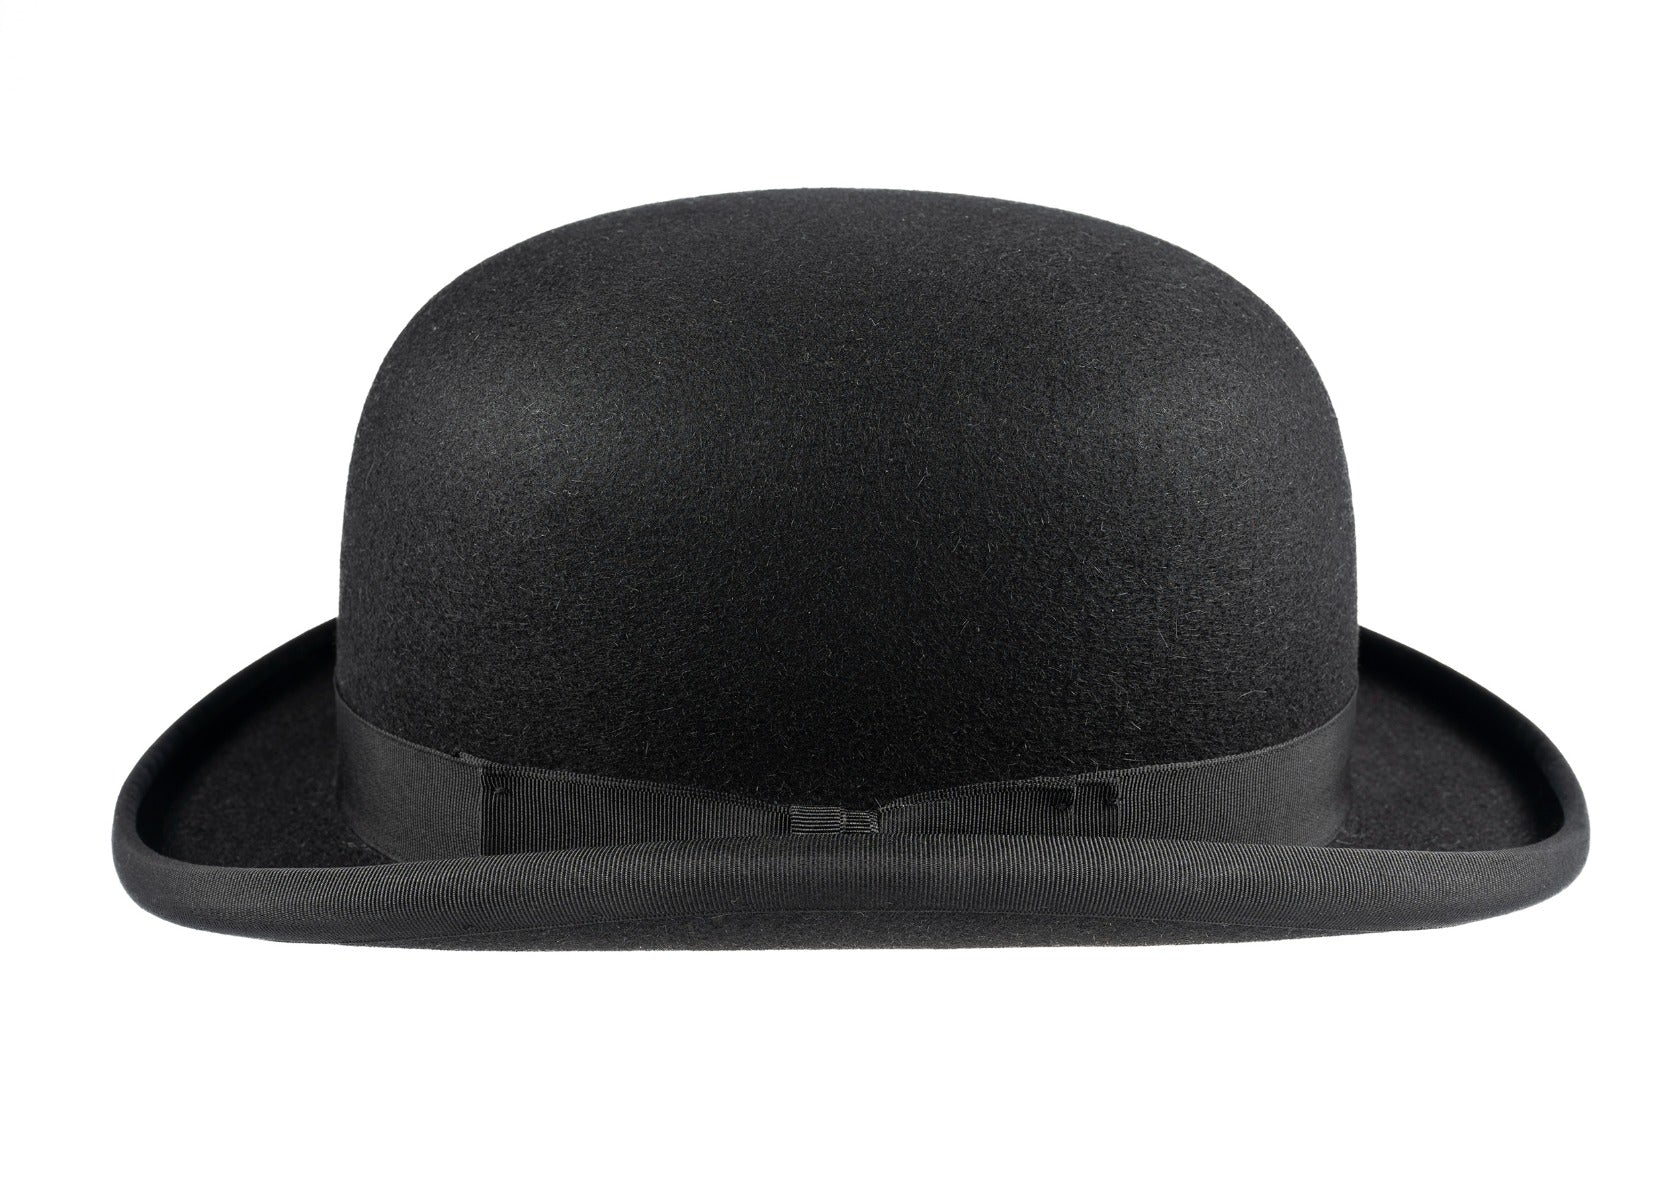 Devon Fur Felt Bowler Hat with Adjustable Hunting Pad